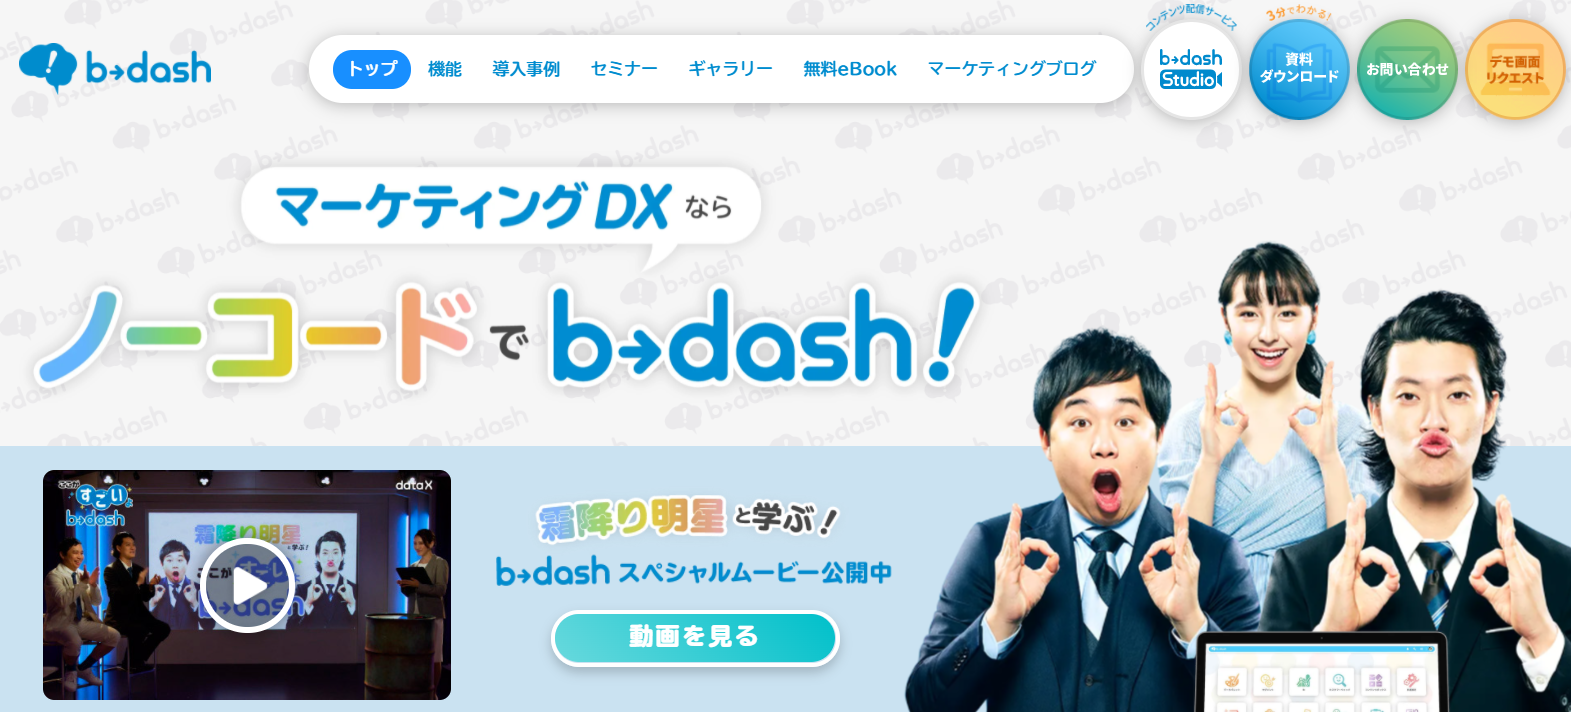 b→dash!